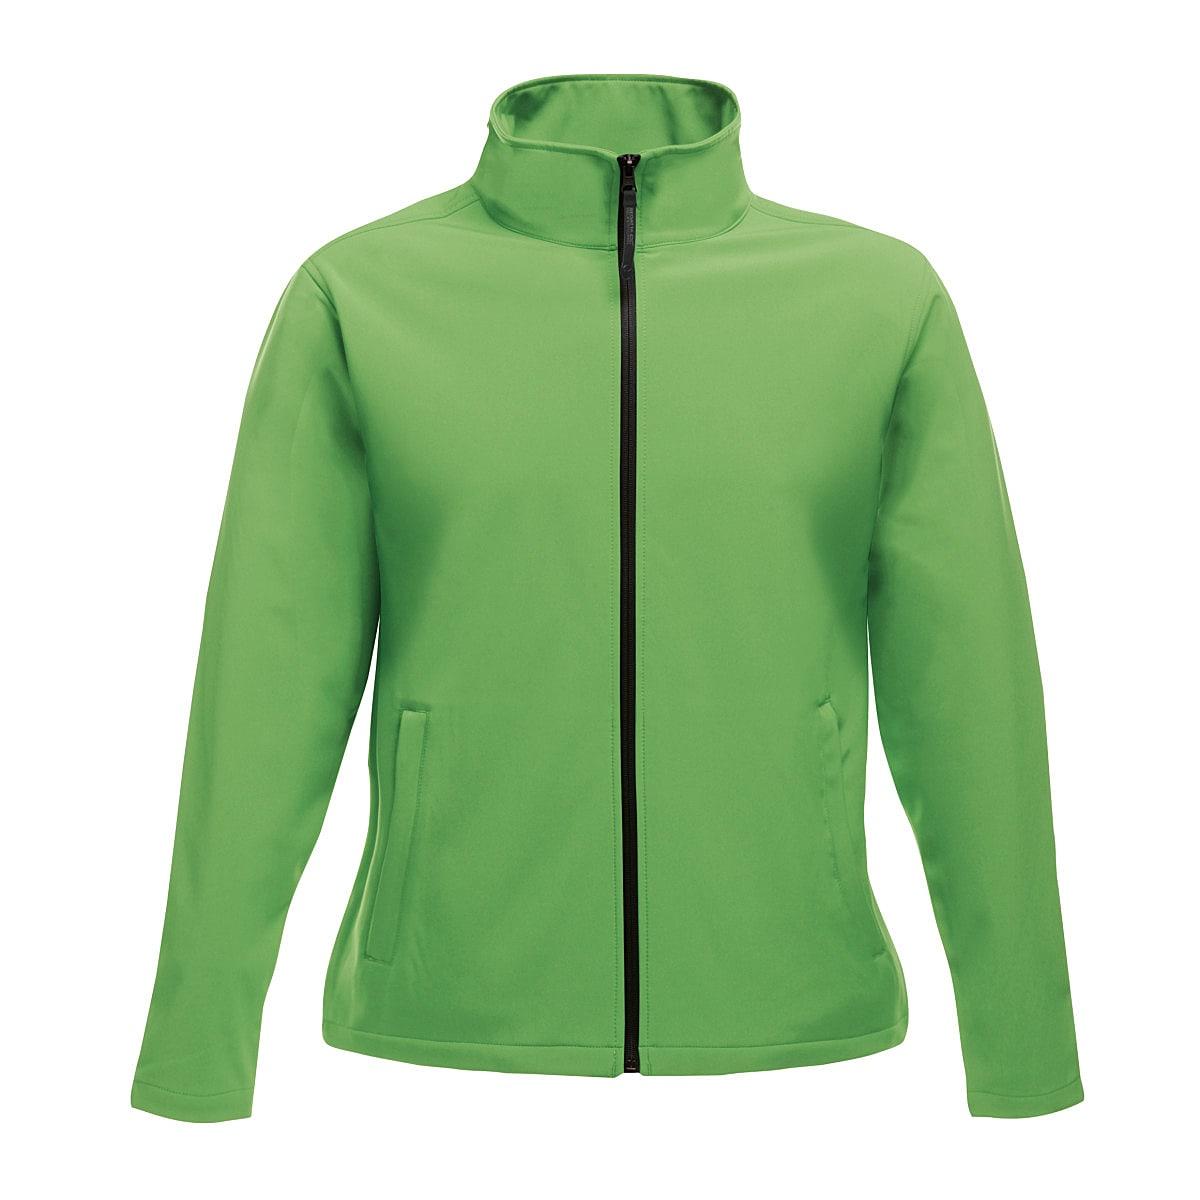 Regatta Women Ablaze Softshell Jacket in Extreme Green / Black (Product Code: TRA629)